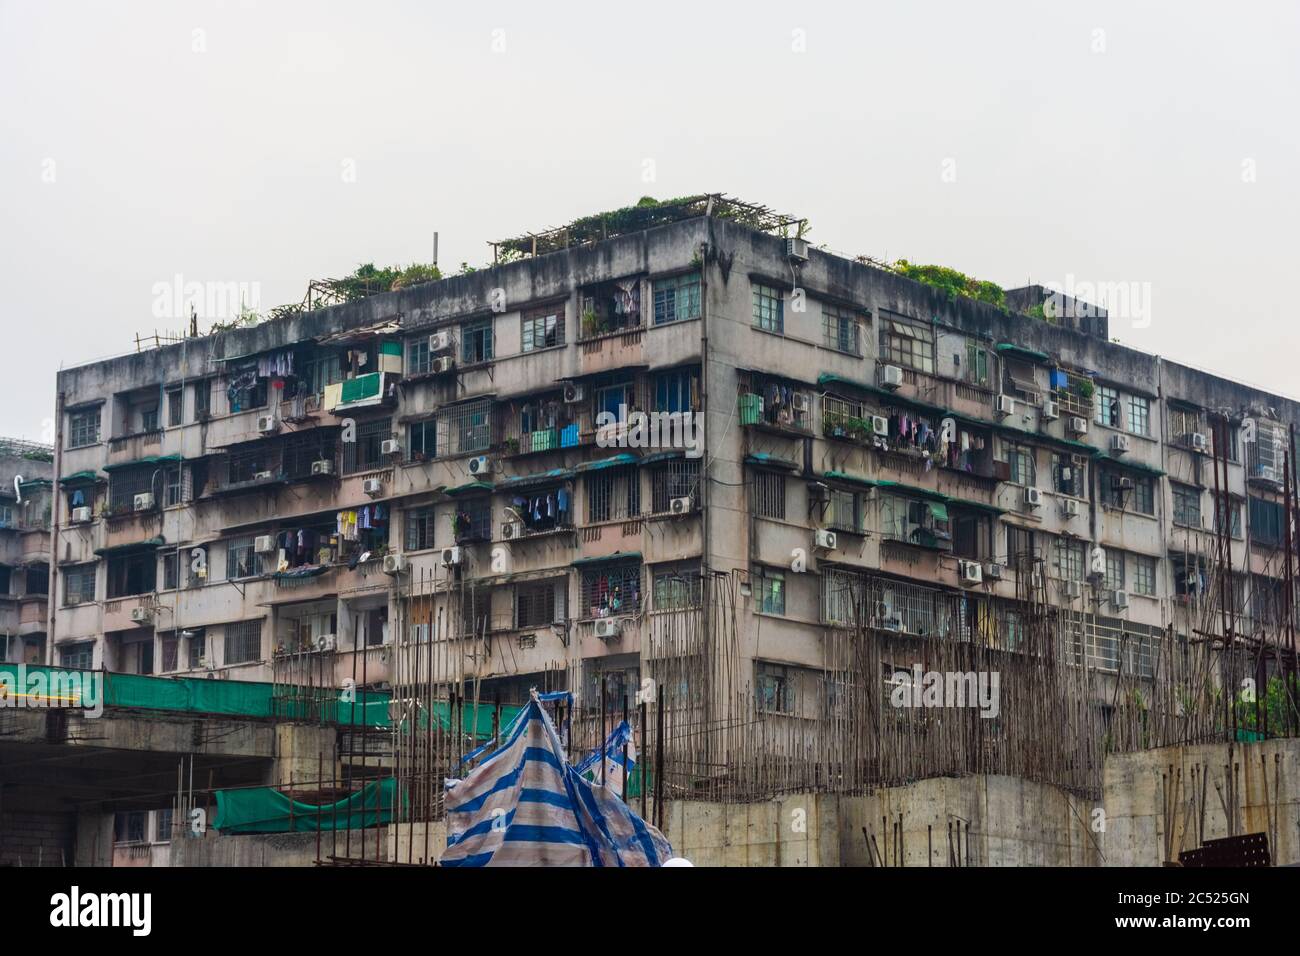 guangzhou-china-18-november-2019-crumbling-old-and-ugly-building-in-guangzhou-2C525GN.jpg